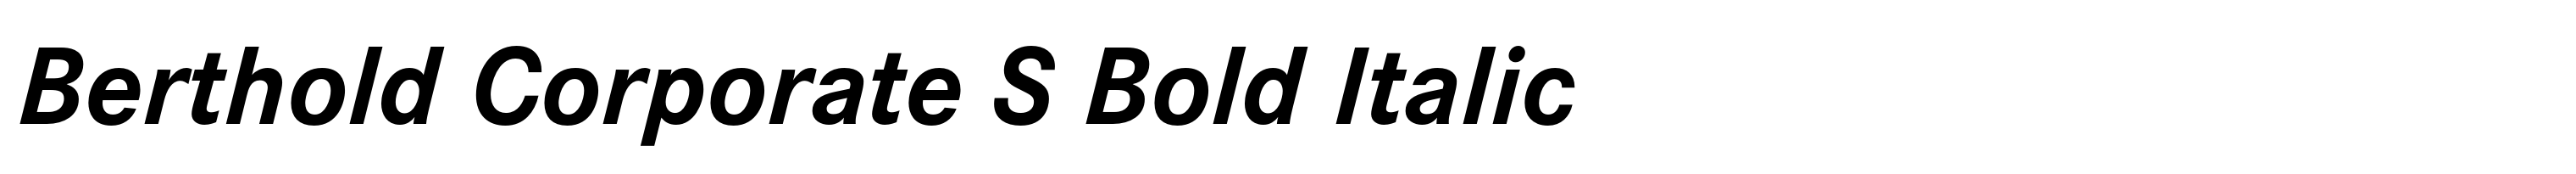 Berthold Corporate S Bold Italic